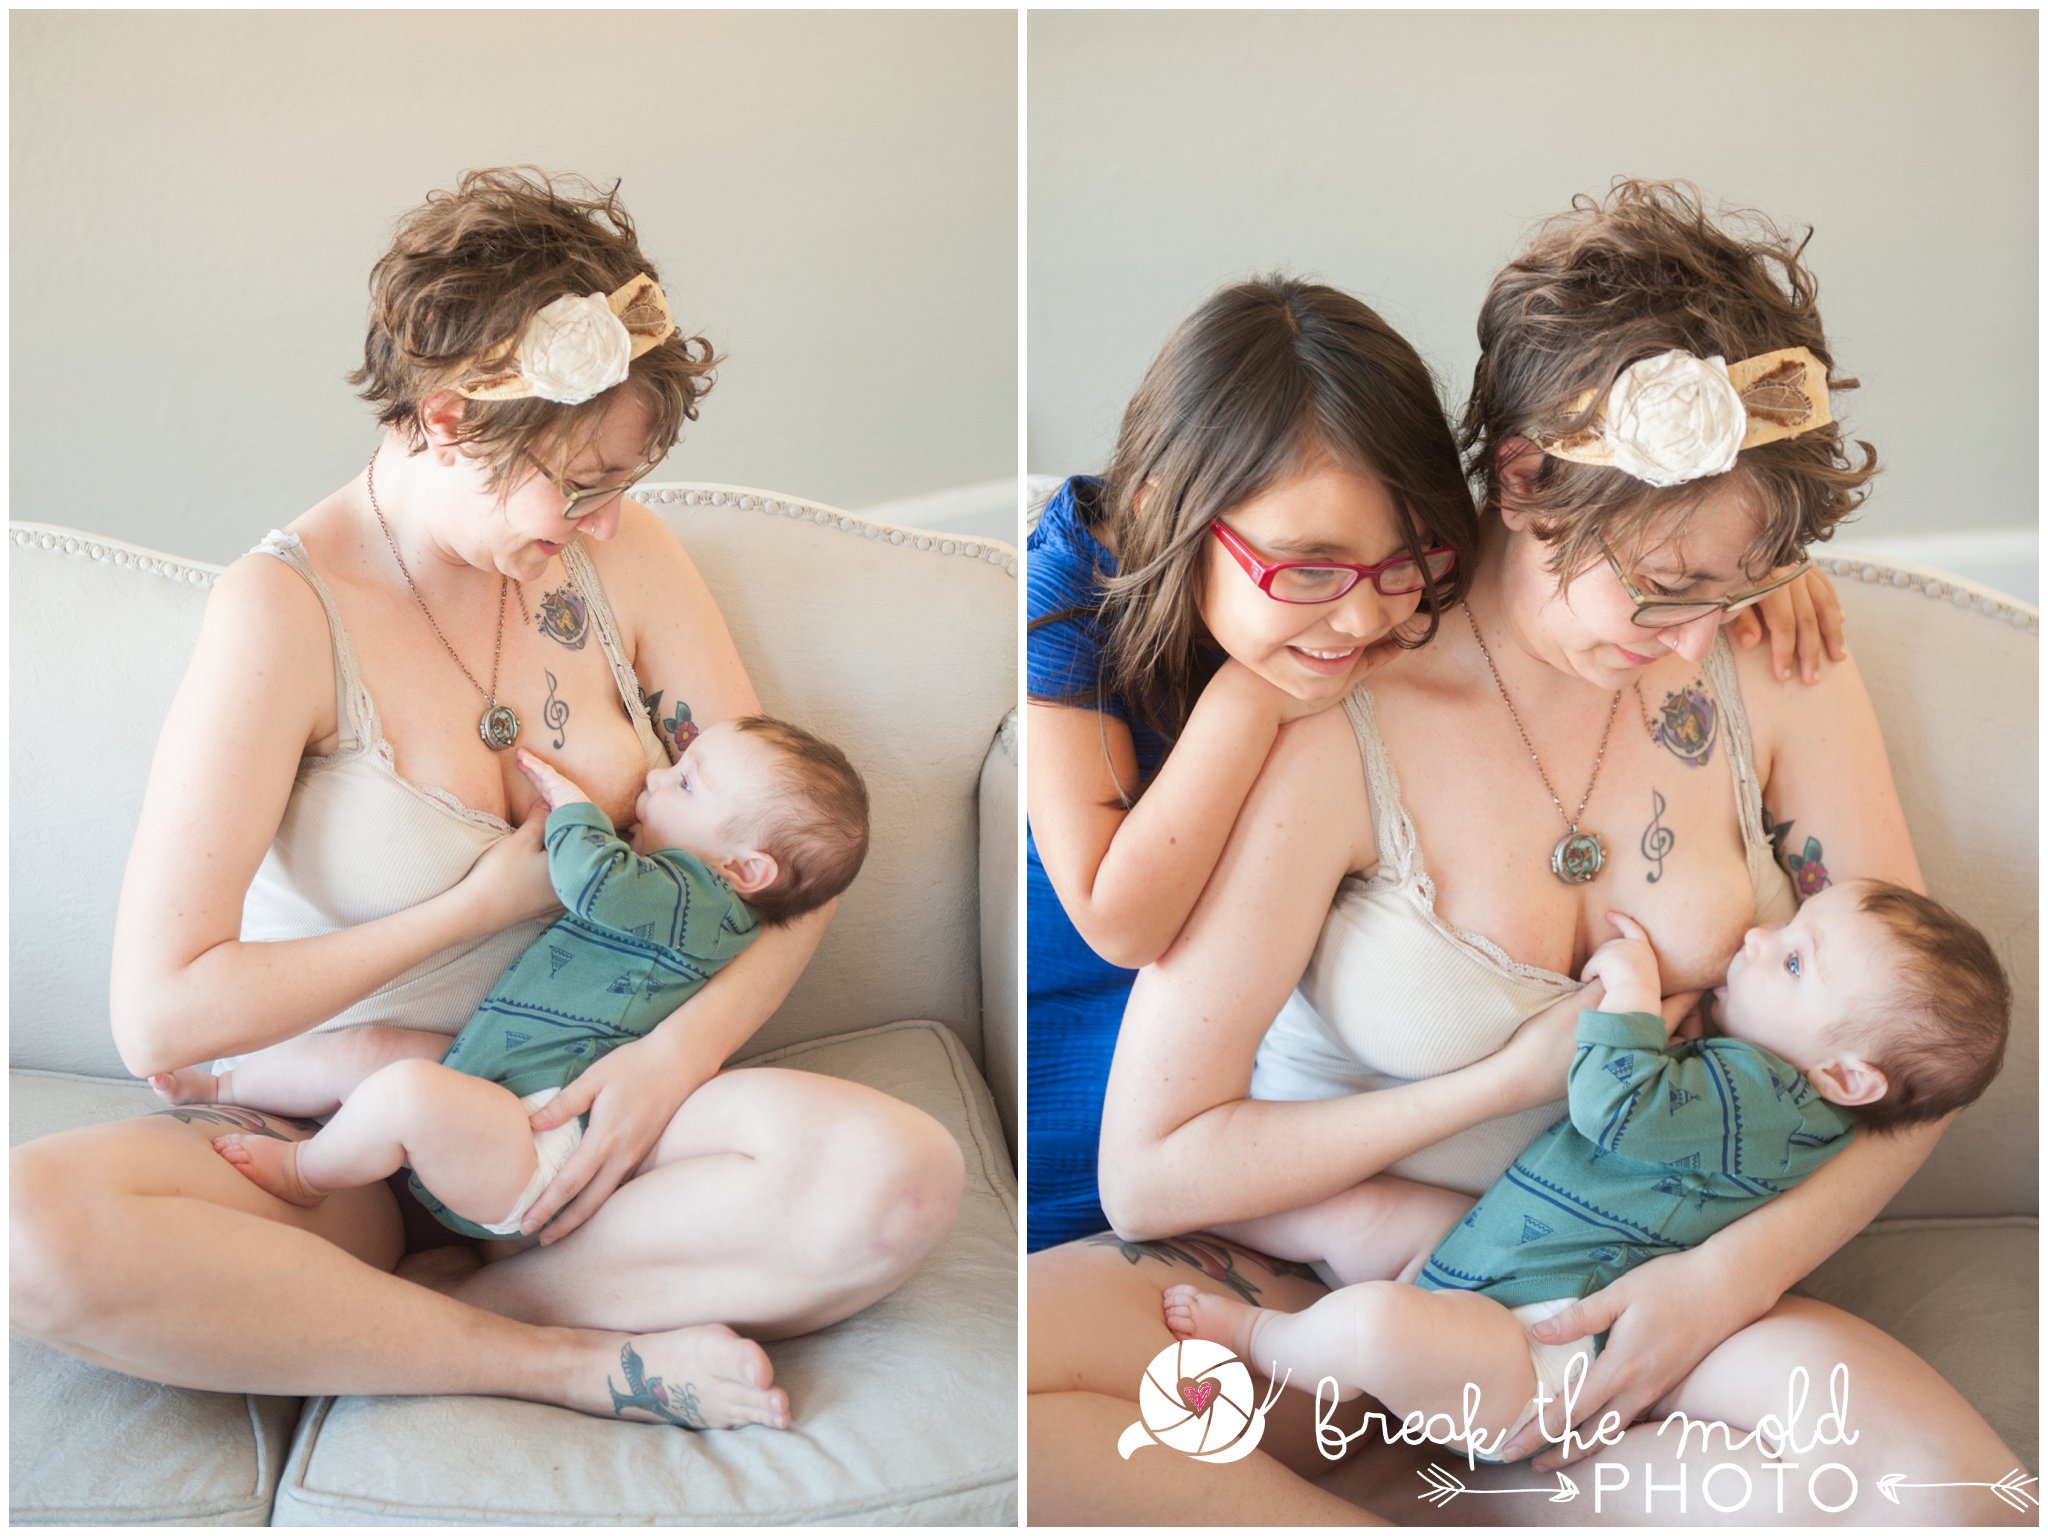 break-the-mold-photo-nursing-body-love-baby-pregnant-women-powerful-breastfeeding-sessions_7227.jpg